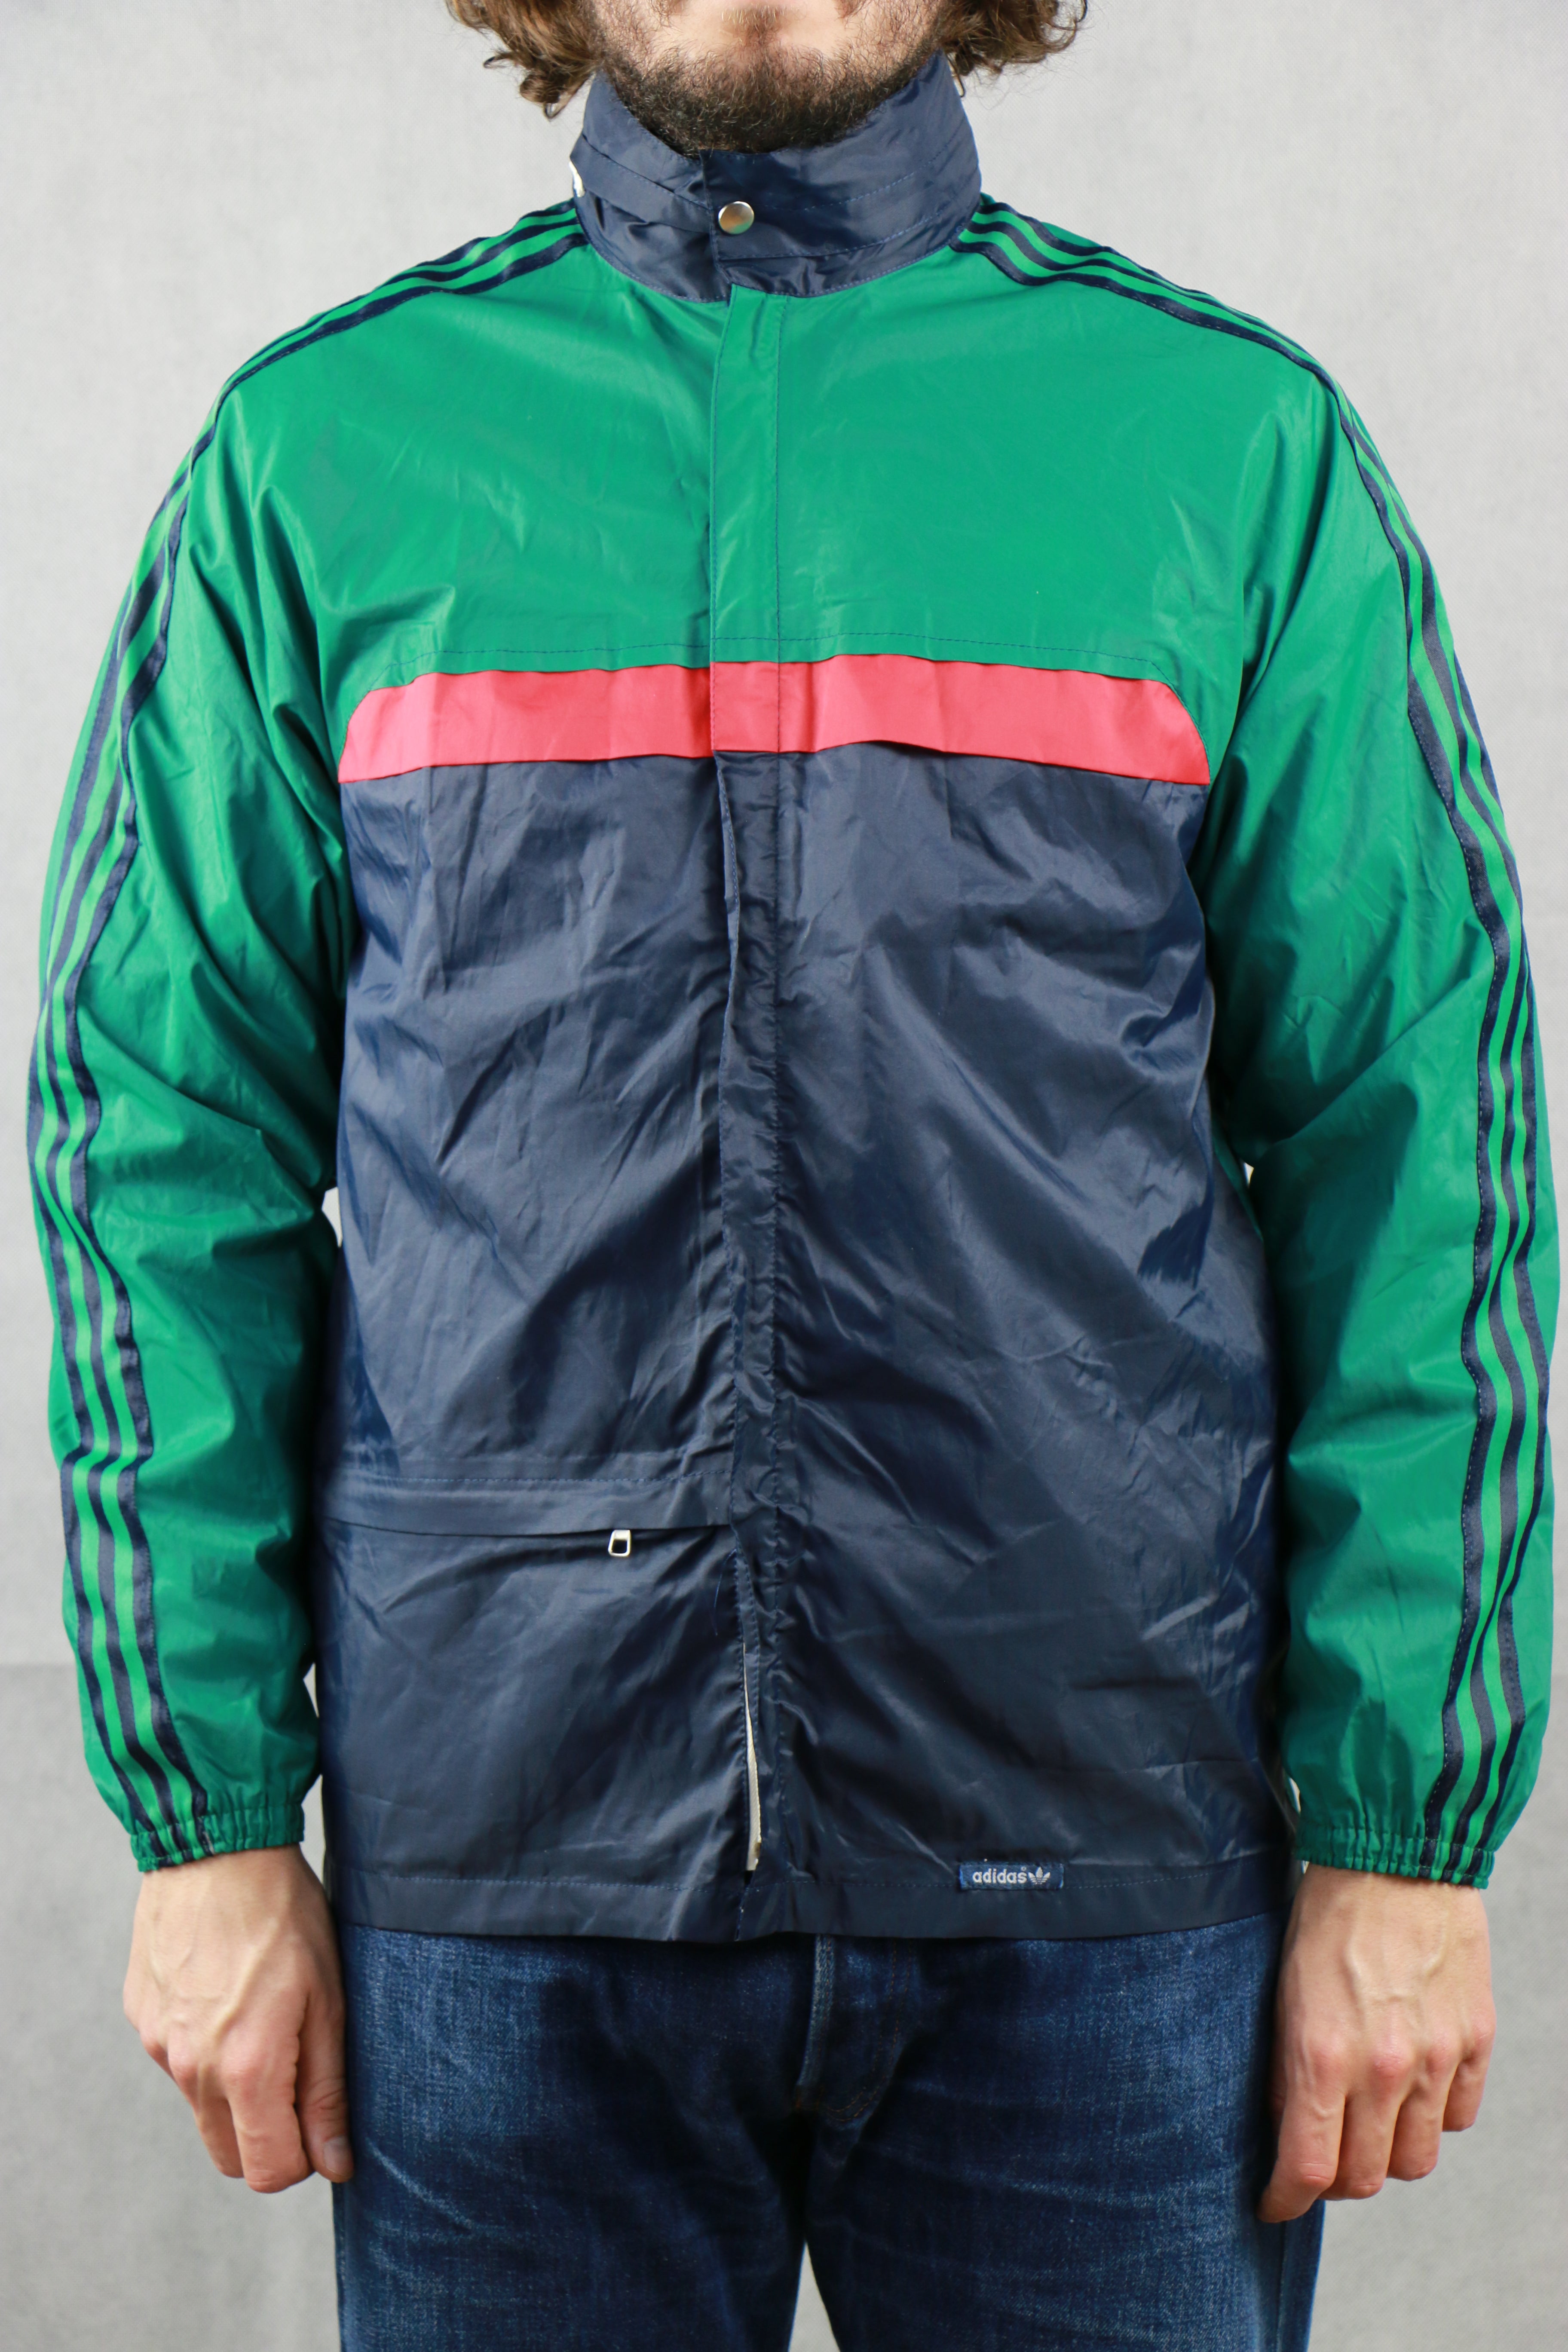 Adidas Rain Jacket